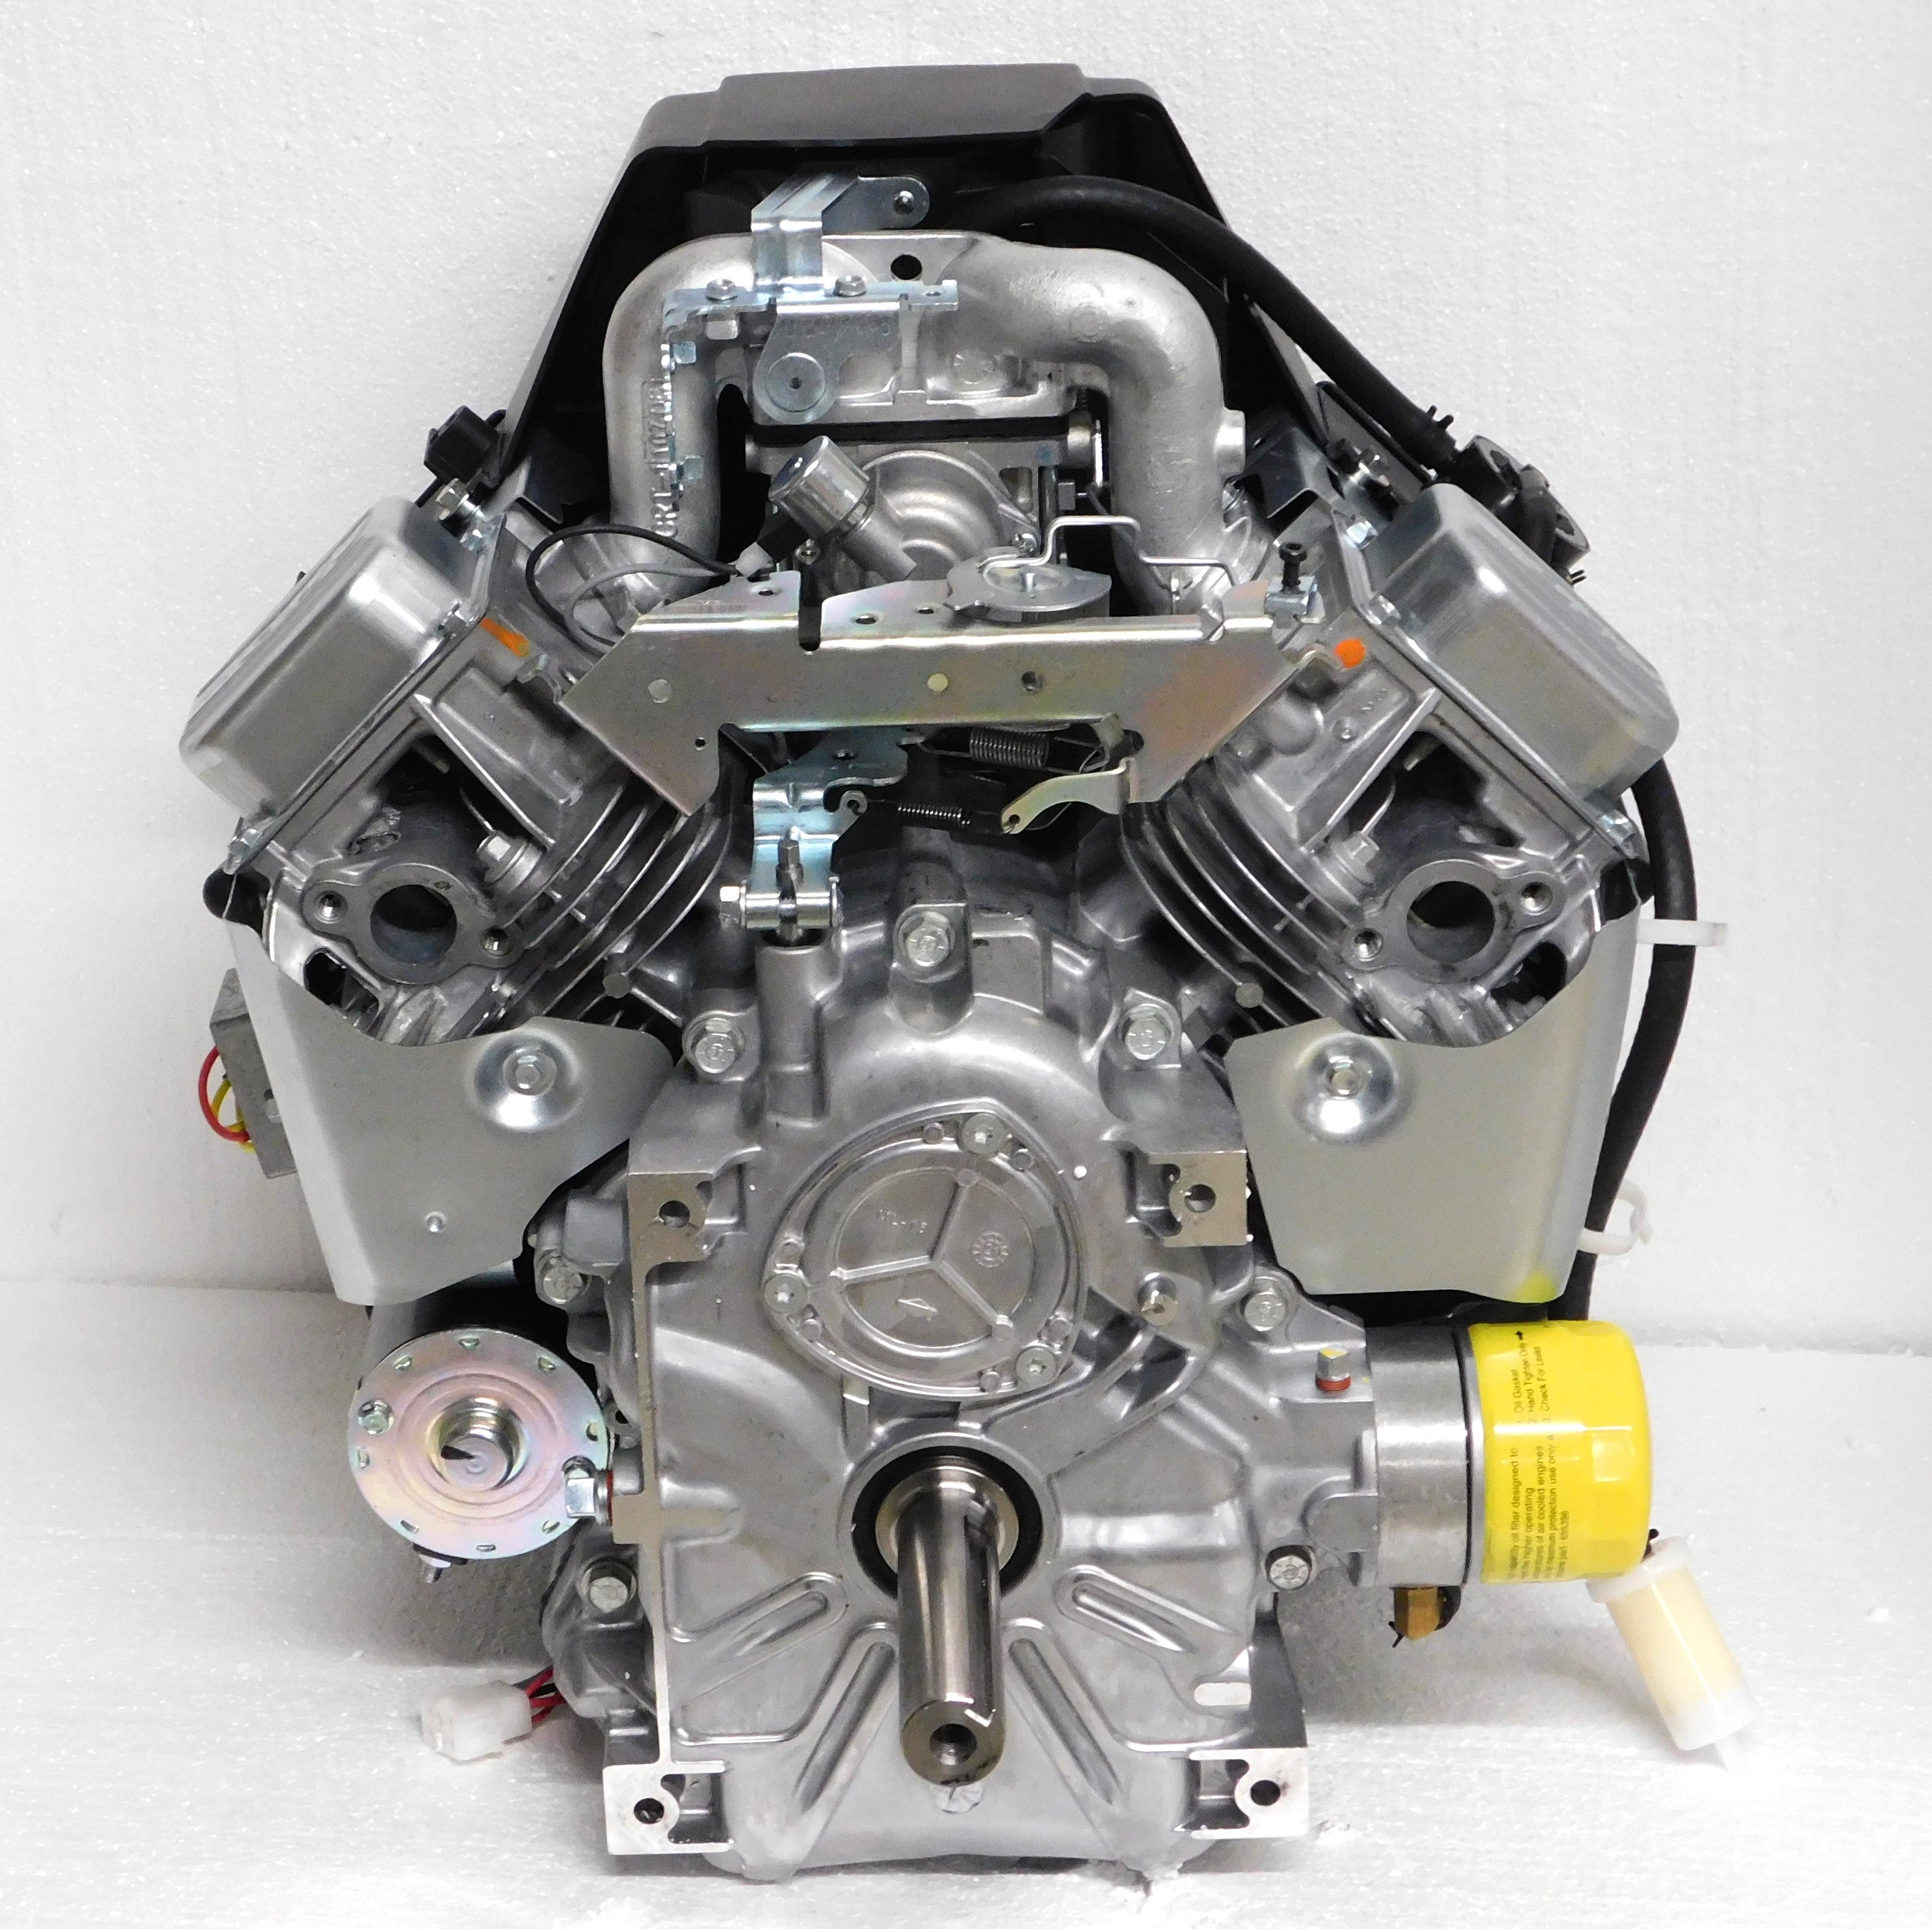 Briggs & Stratton 27 HP 810cc Professional Series Engine 1-1/8 x 4-5/16 #49T877-0035